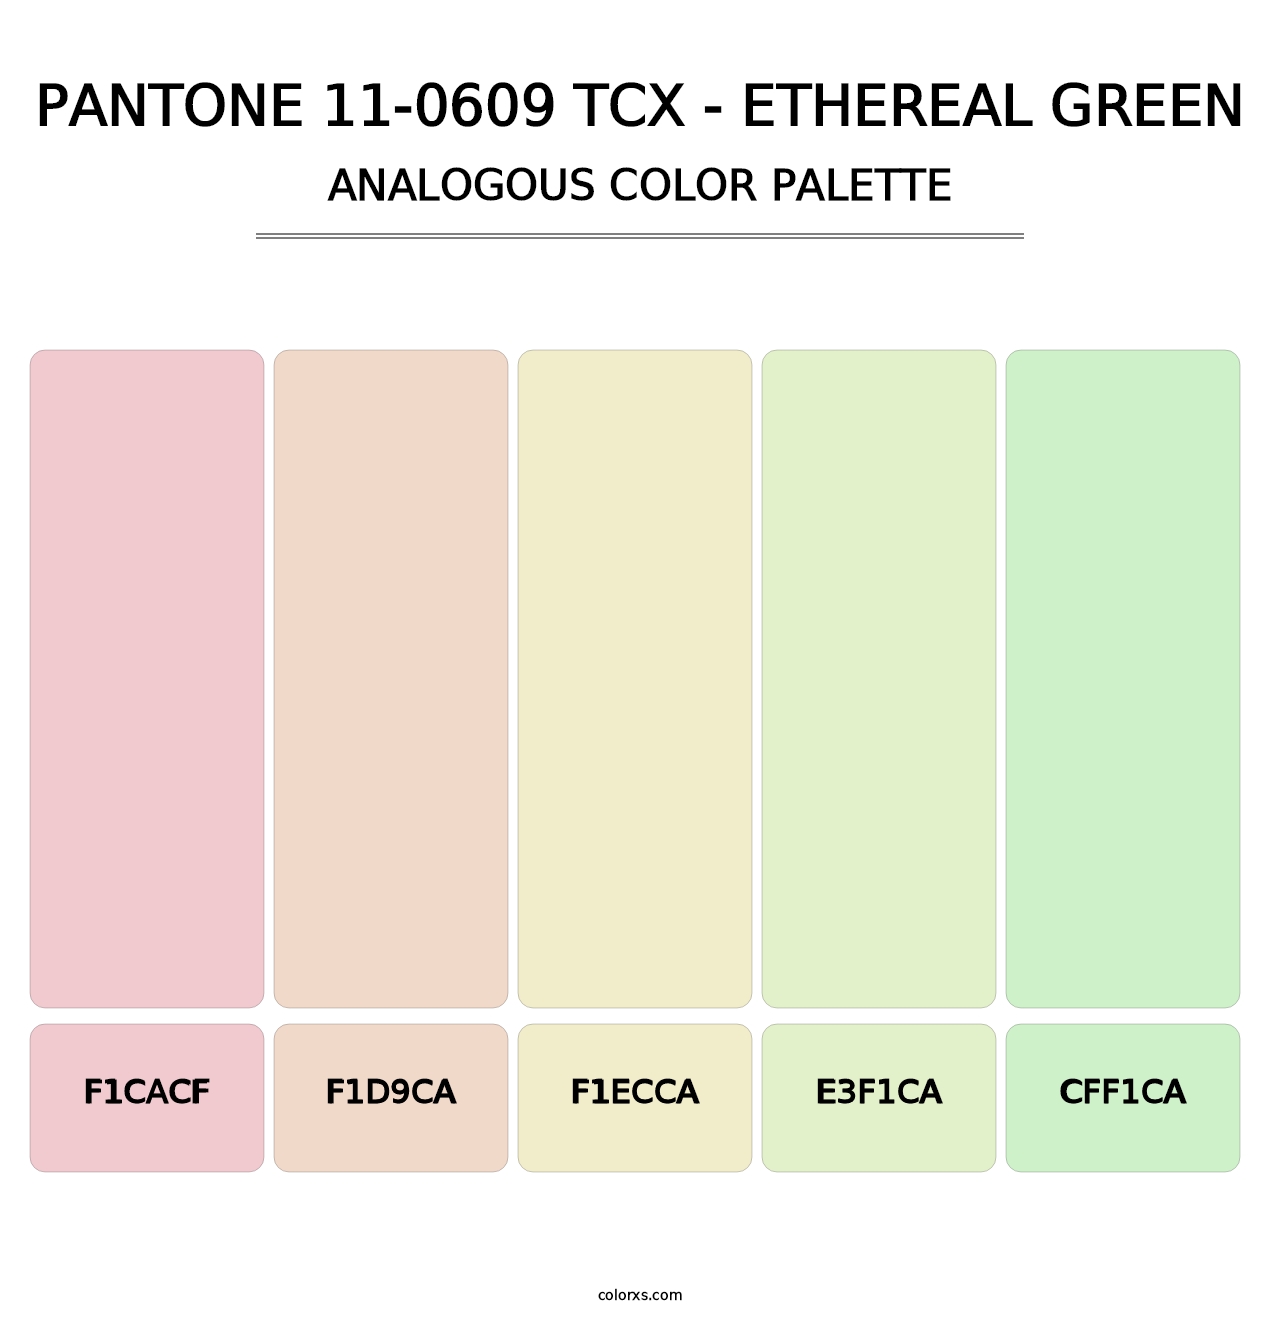 PANTONE 11-0609 TCX - Ethereal Green - Analogous Color Palette